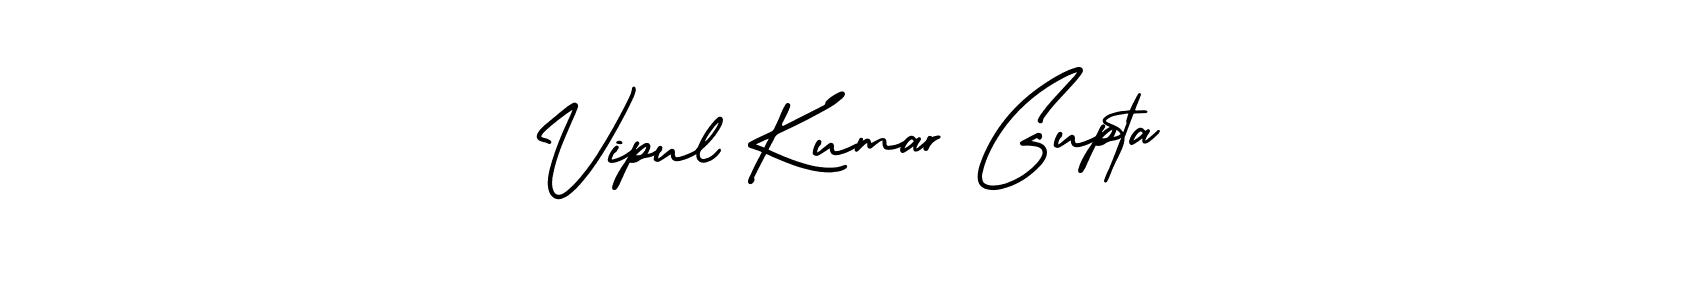 How to Draw Vipul Kumar Gupta signature style? AmerikaSignatureDemo-Regular is a latest design signature styles for name Vipul Kumar Gupta. Vipul Kumar Gupta signature style 3 images and pictures png